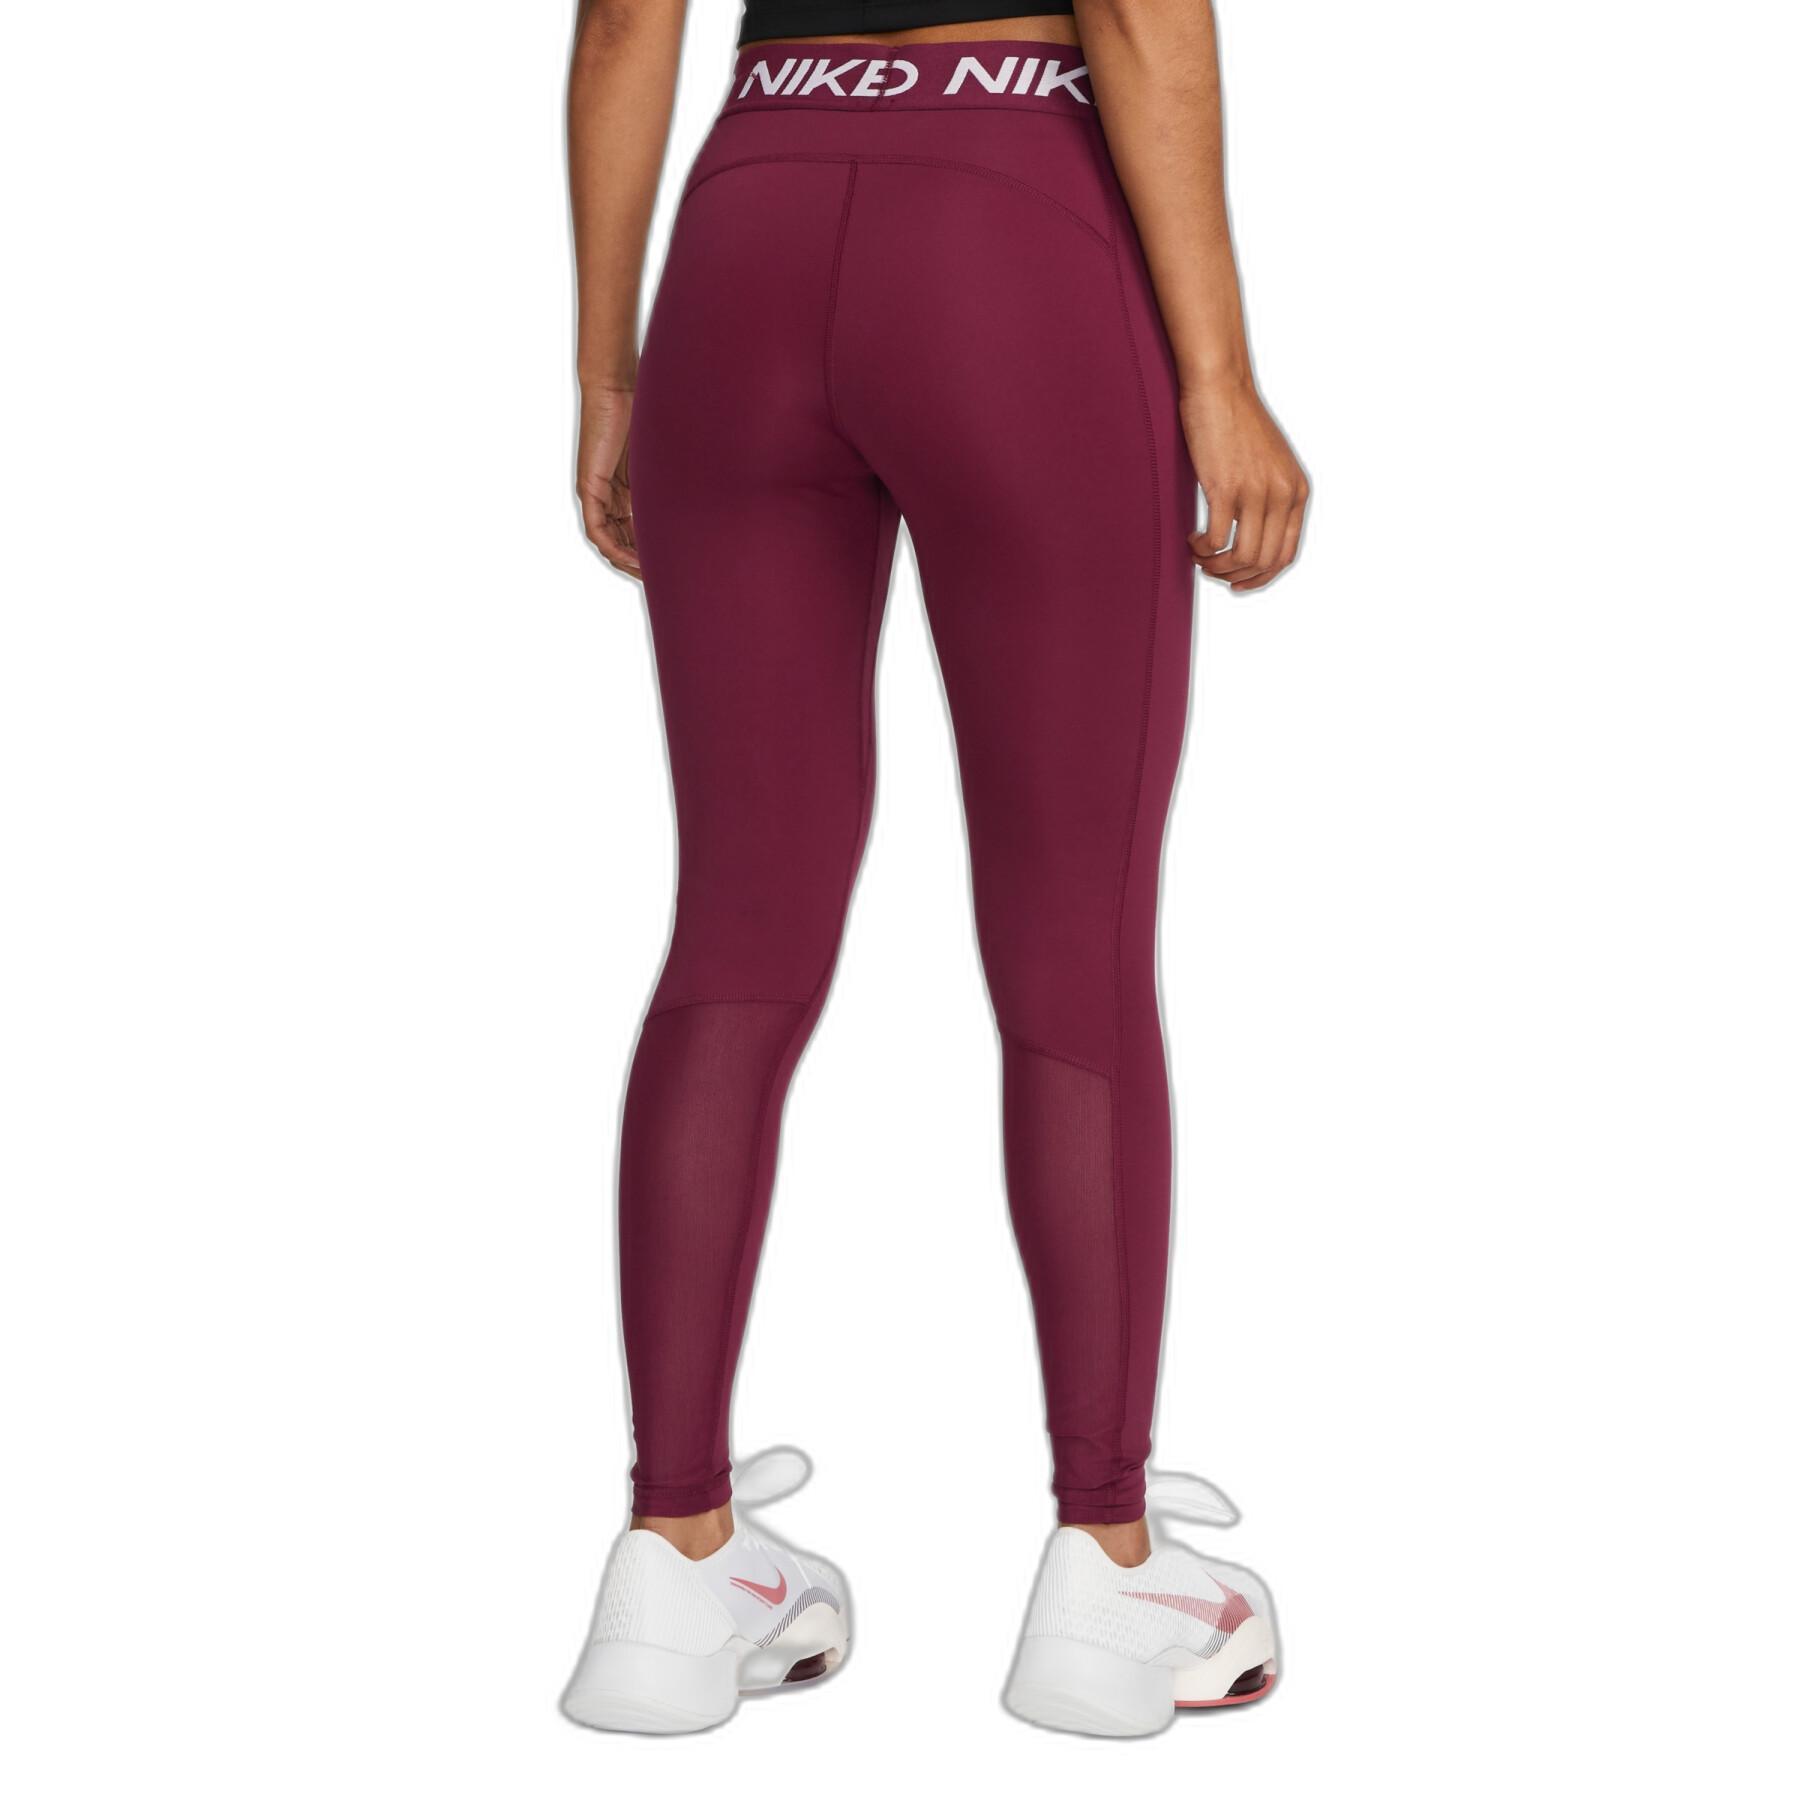 Legging woman Nike Pro 365 - Baselayers - Textile - Handball wear